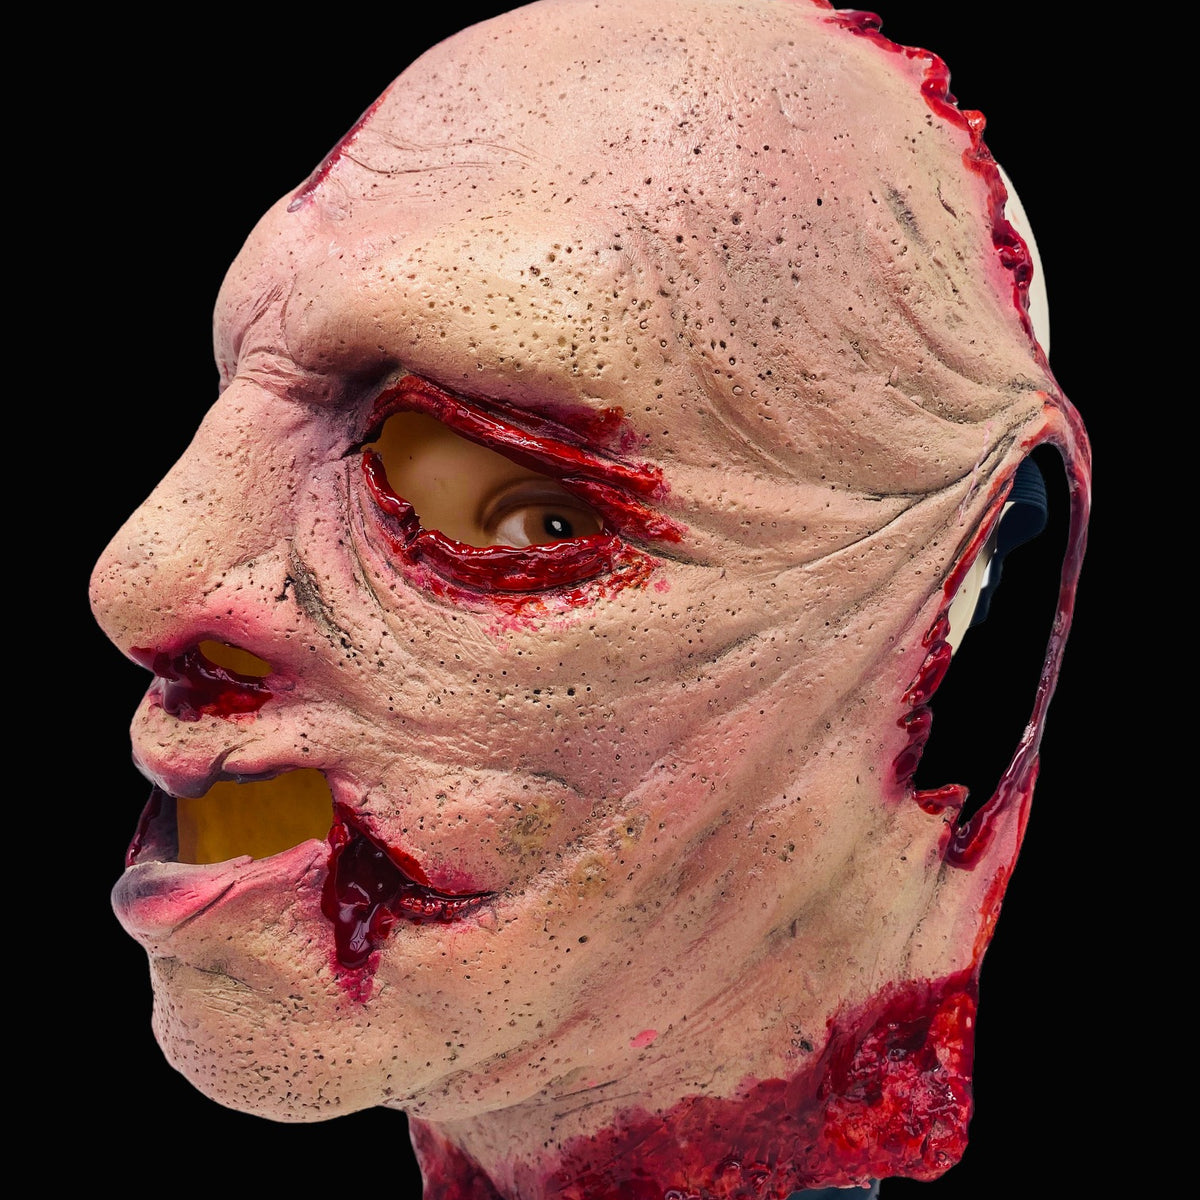 Masque facial à la peau sanglante Texas Butcher